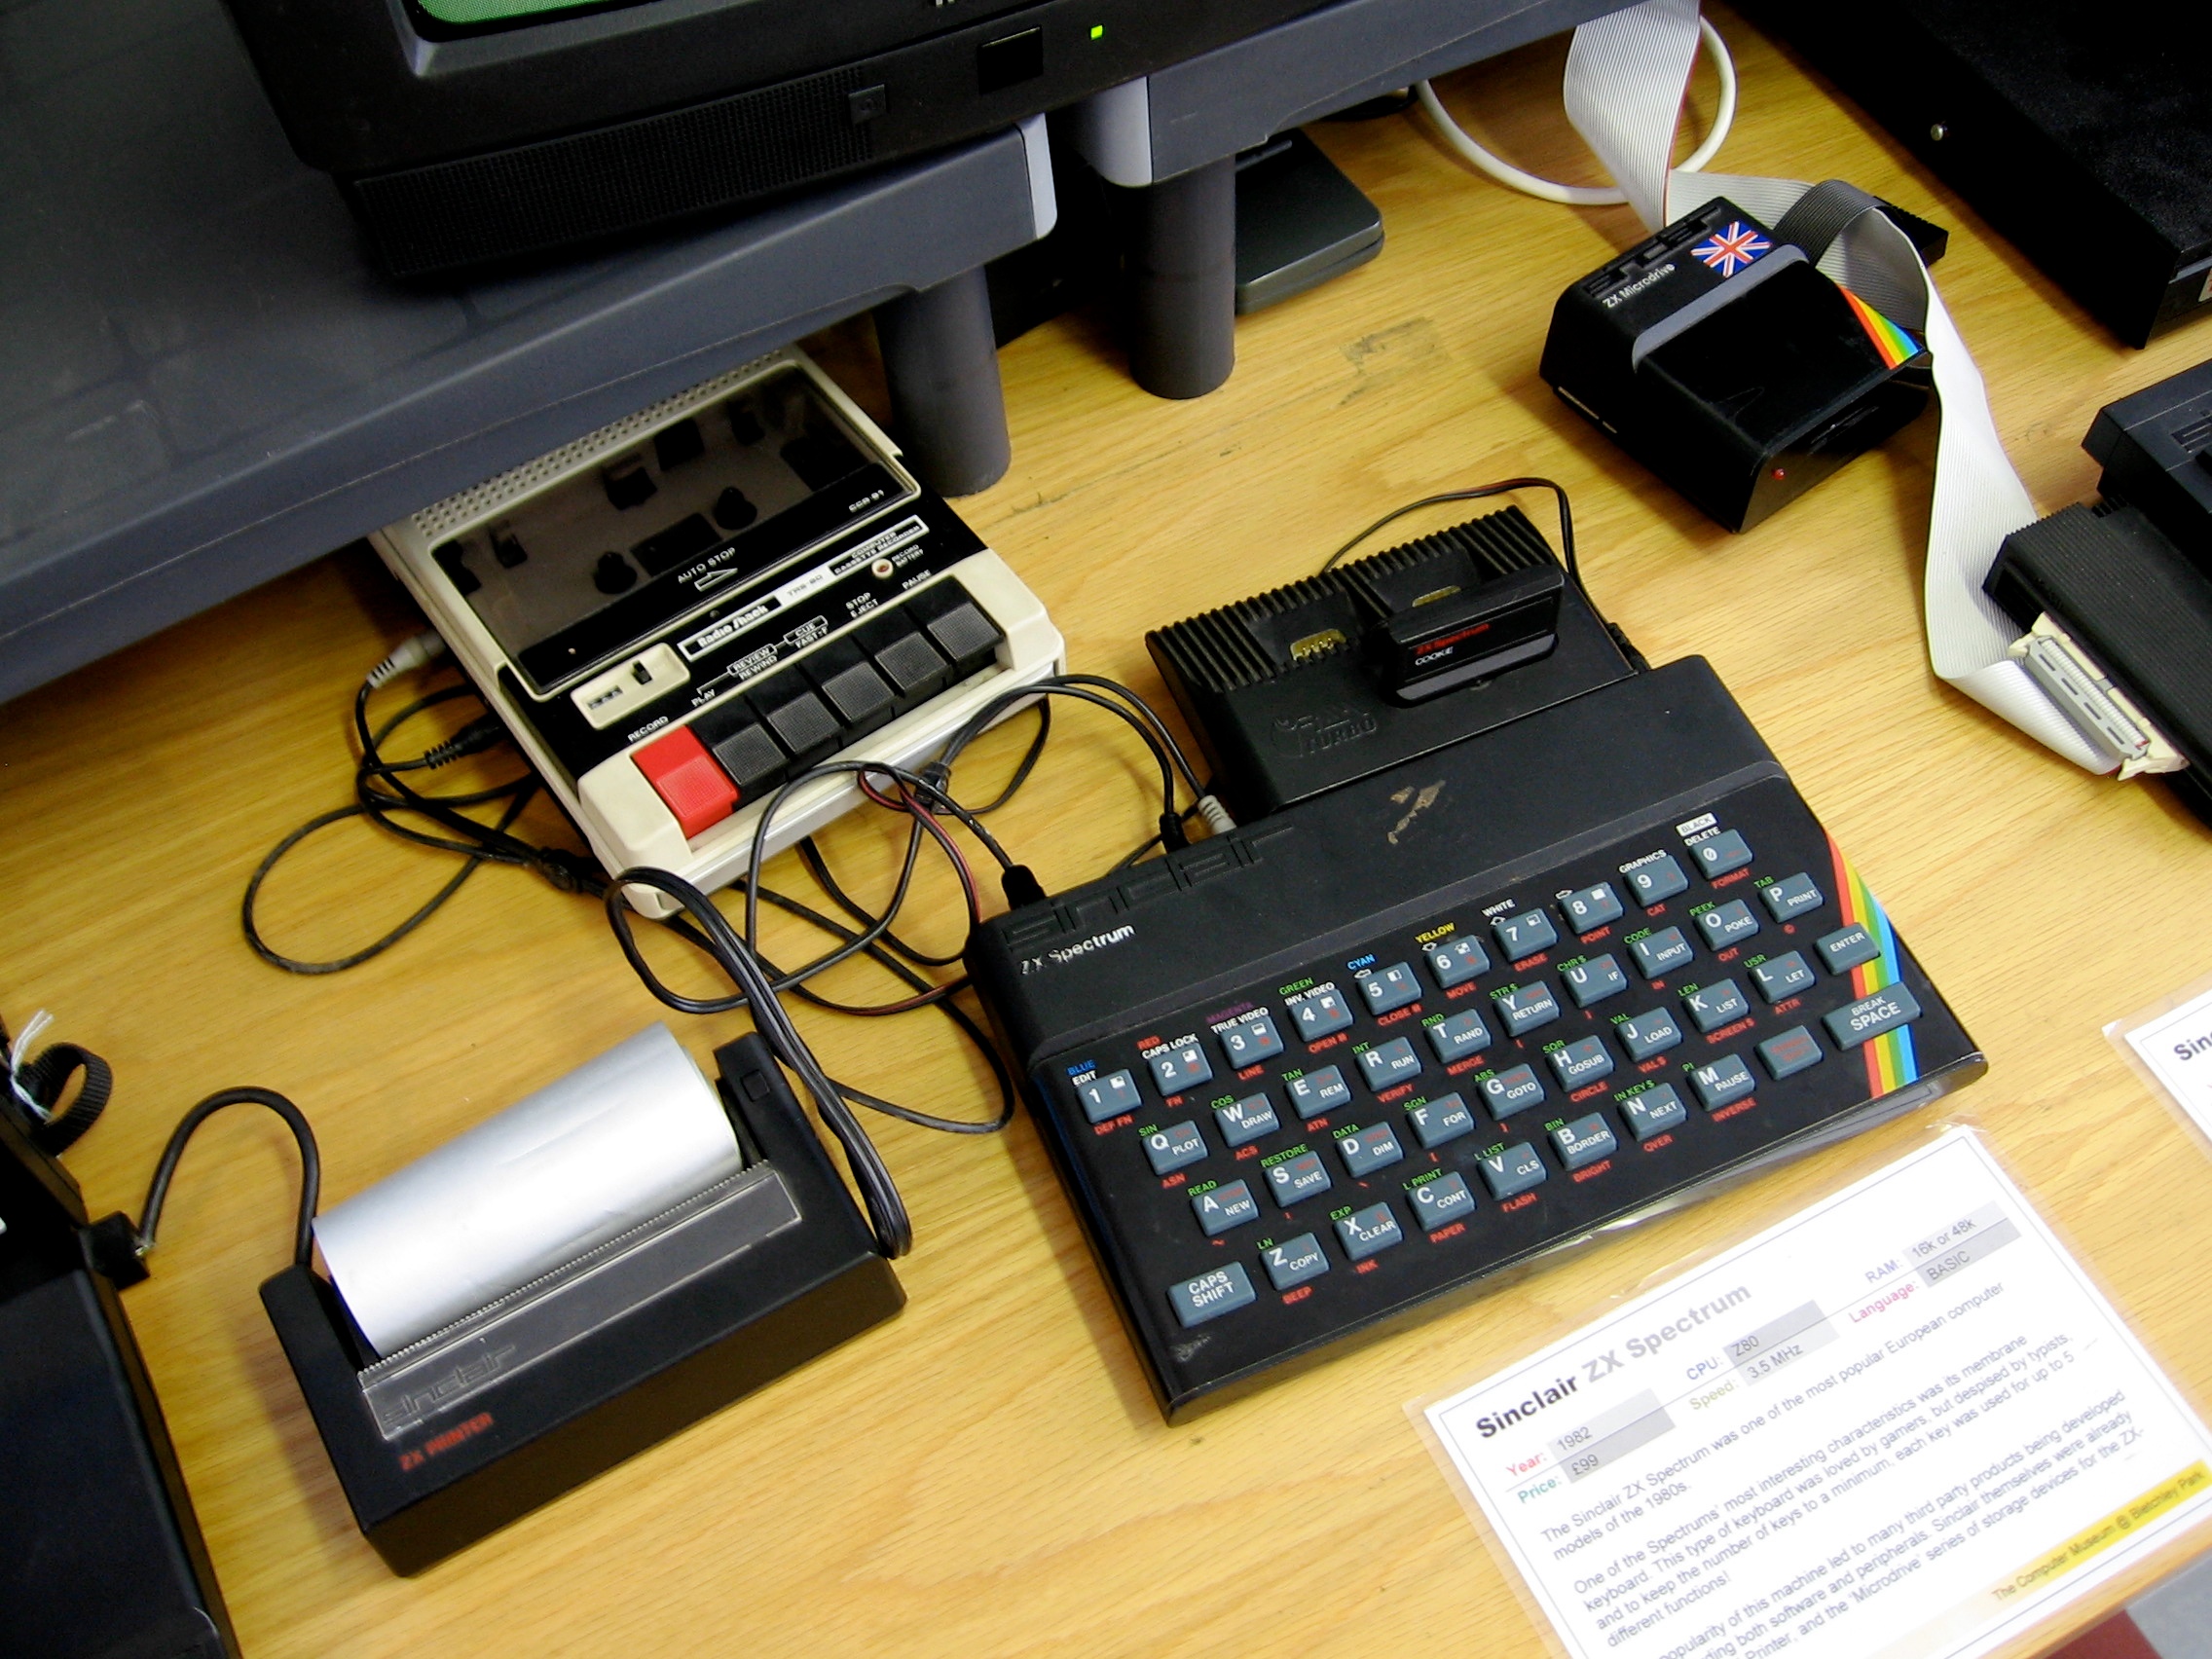 ZX Spectrum and peripherals (2190356060)